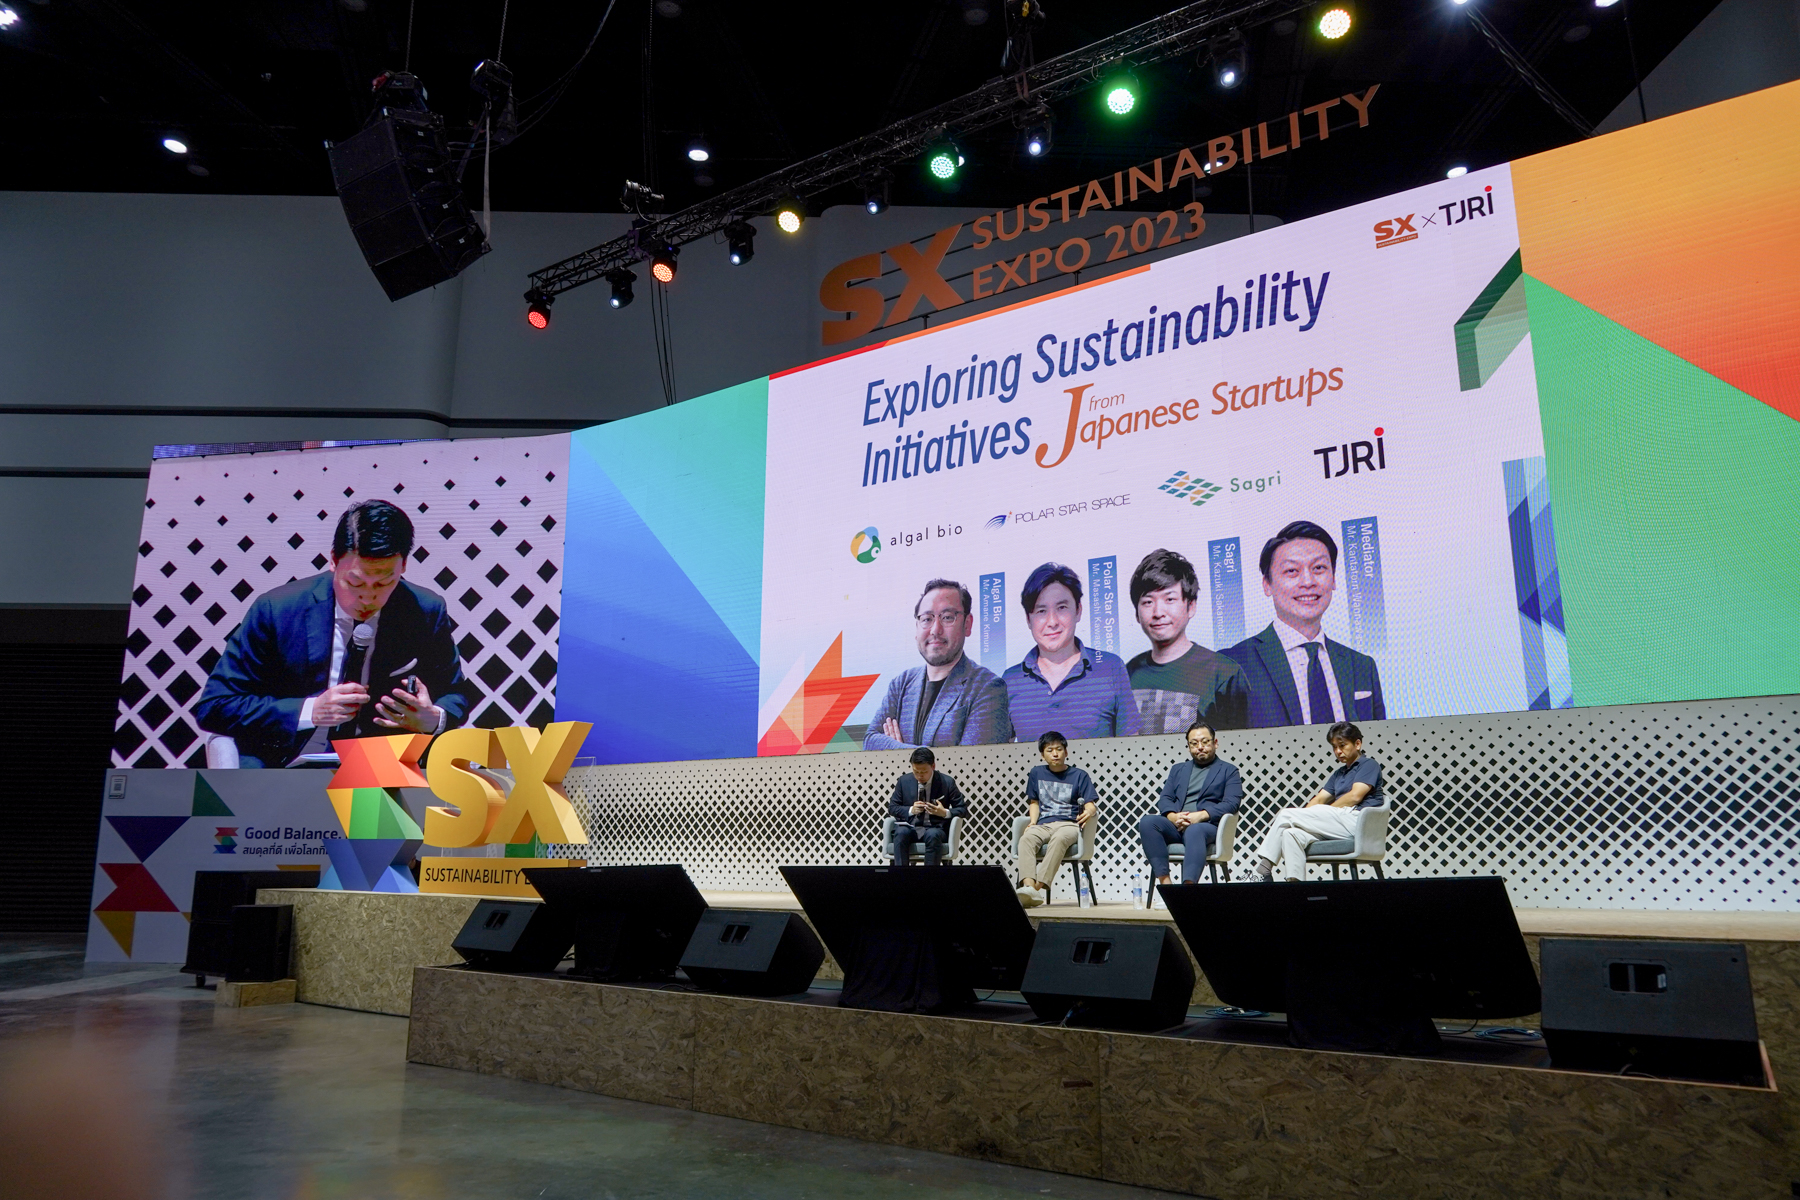 Sustainability Expo 2023 x TJRI พาสตาร์ทอัพญี่ปุ่นร่วม Talk Stage ในหัวข้อ “เปิดมุมมองเทคโนโลยีด้านความยั่งยืนของสตาร์ทอัพญี่ปุ่น”のメイン画像